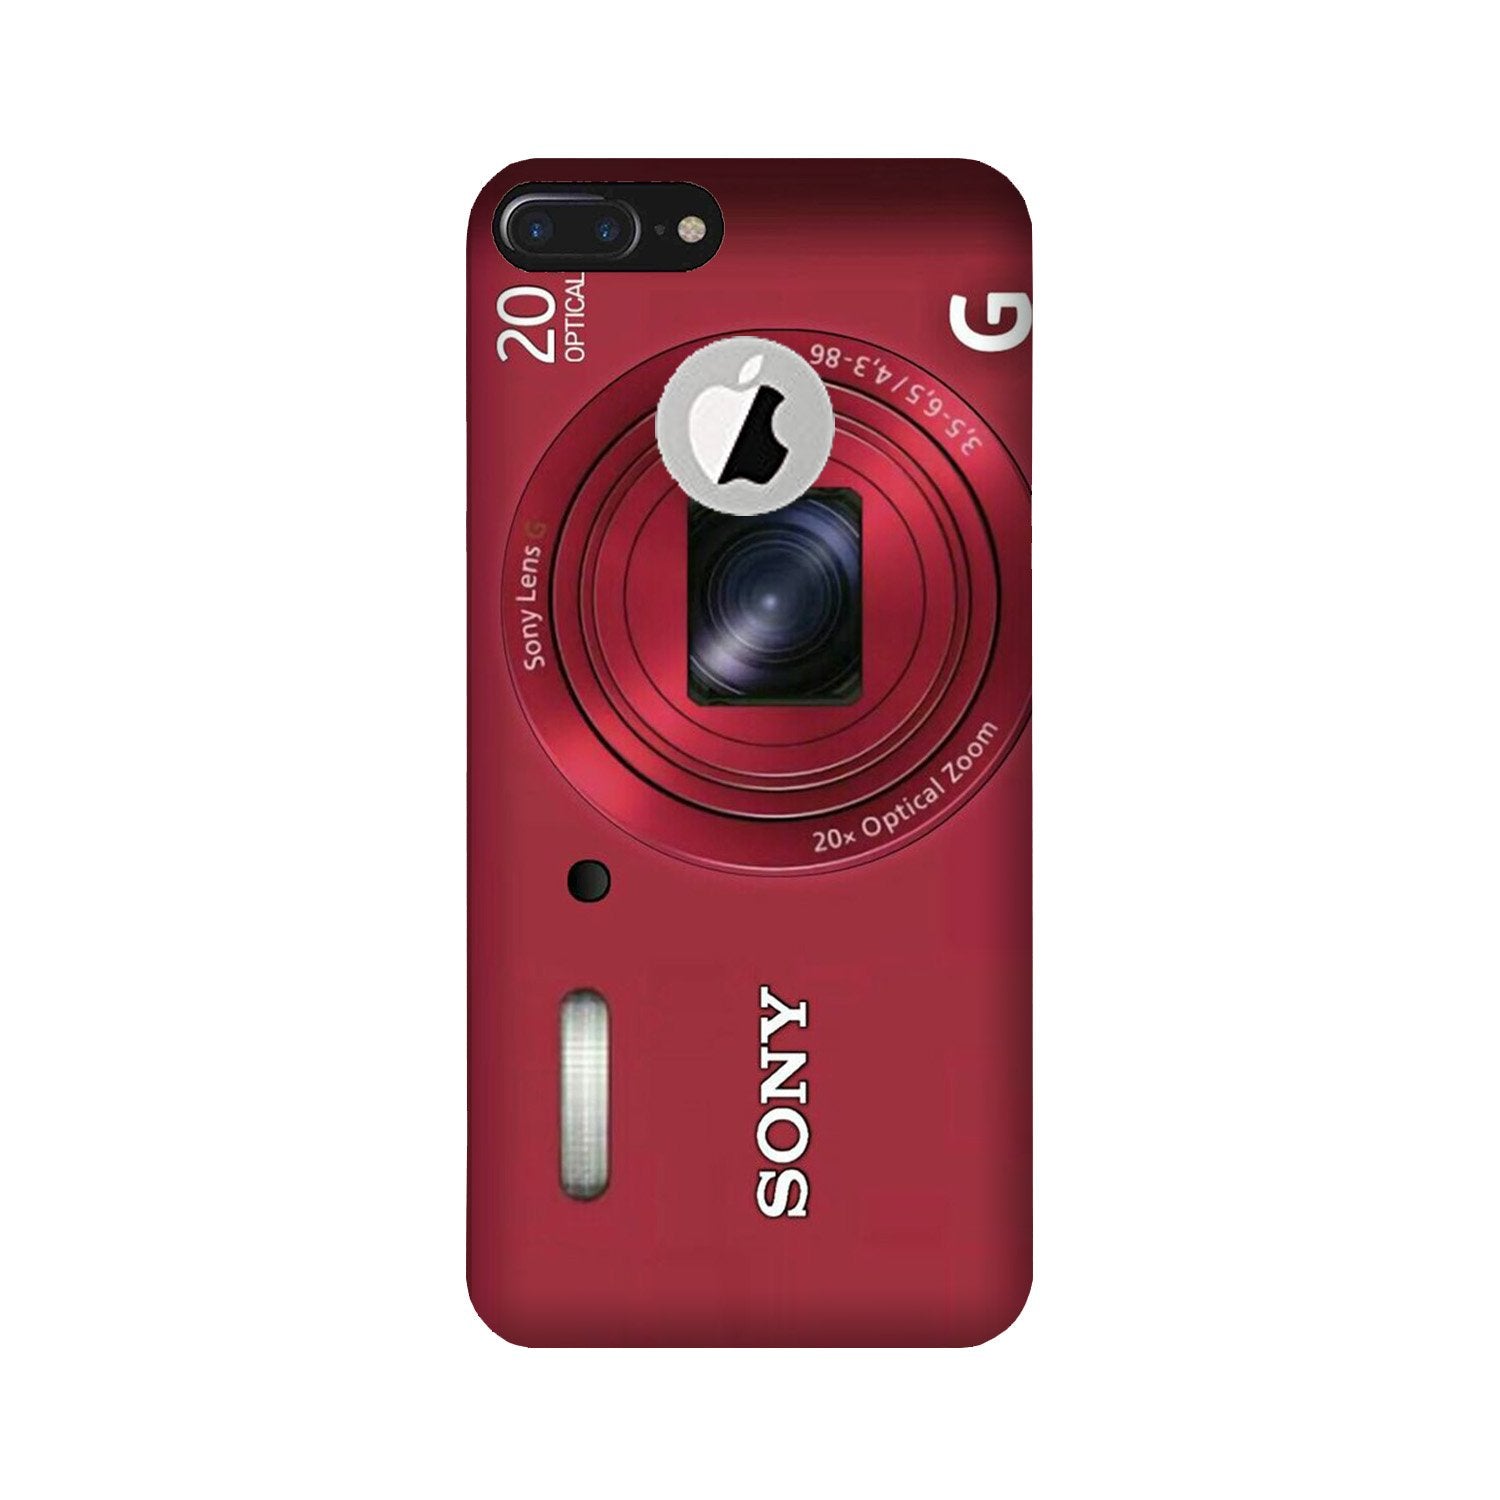 Sony Case for iPhone 7 Plus logo cut (Design No. 274)